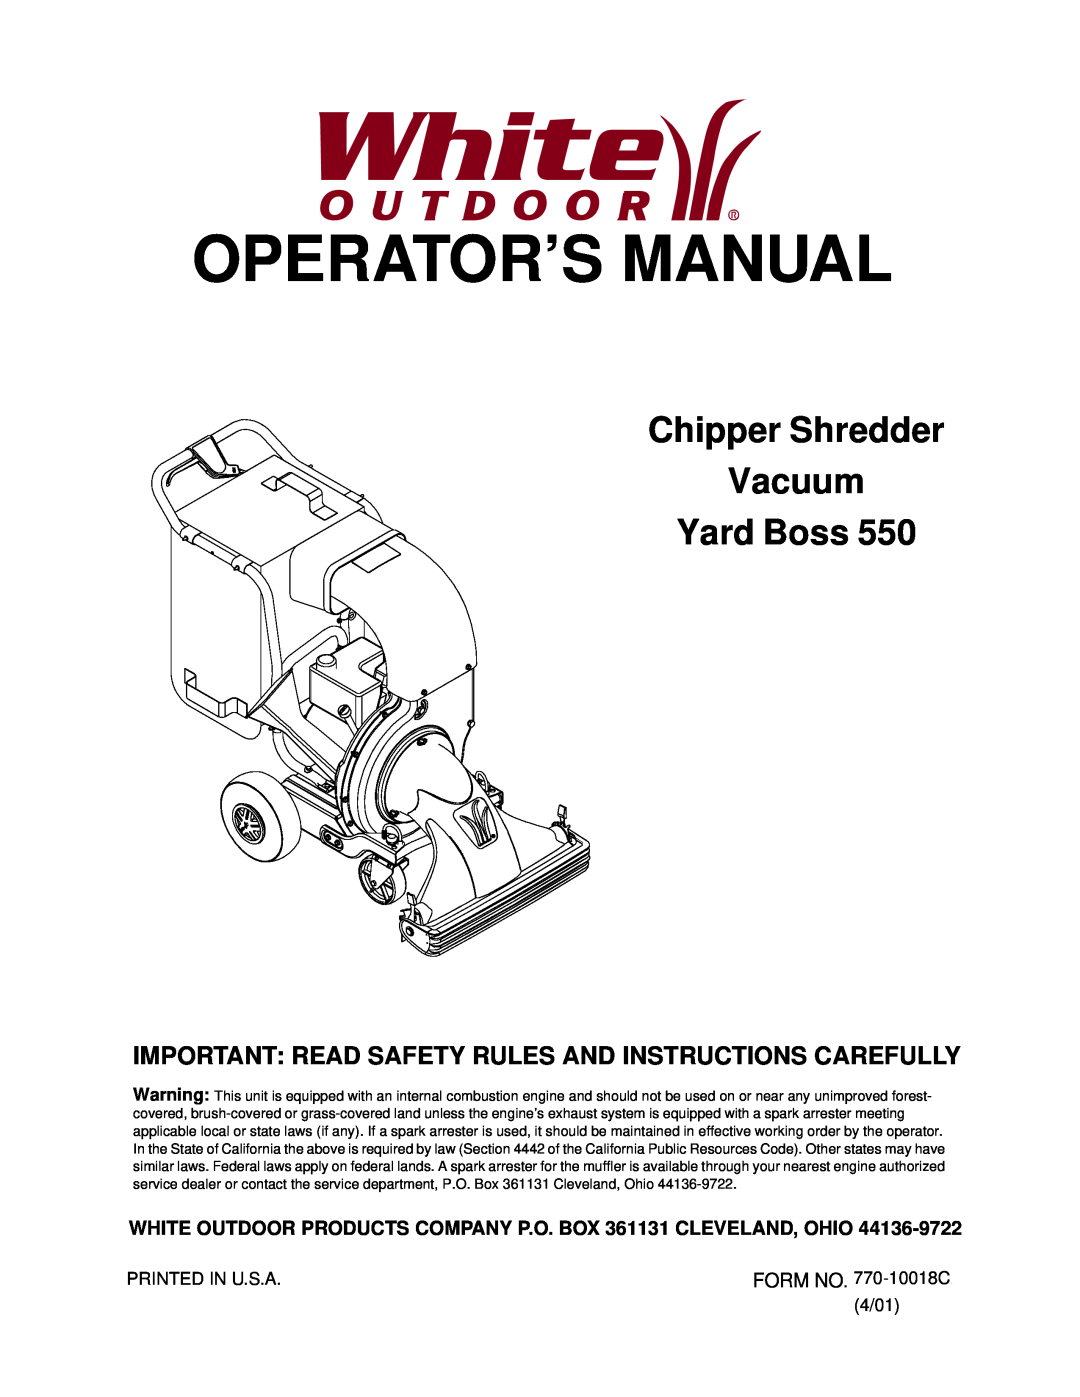 White Outdoor 550 manual Operator’S Manual, Chipper Shredder Vacuum Yard Boss 